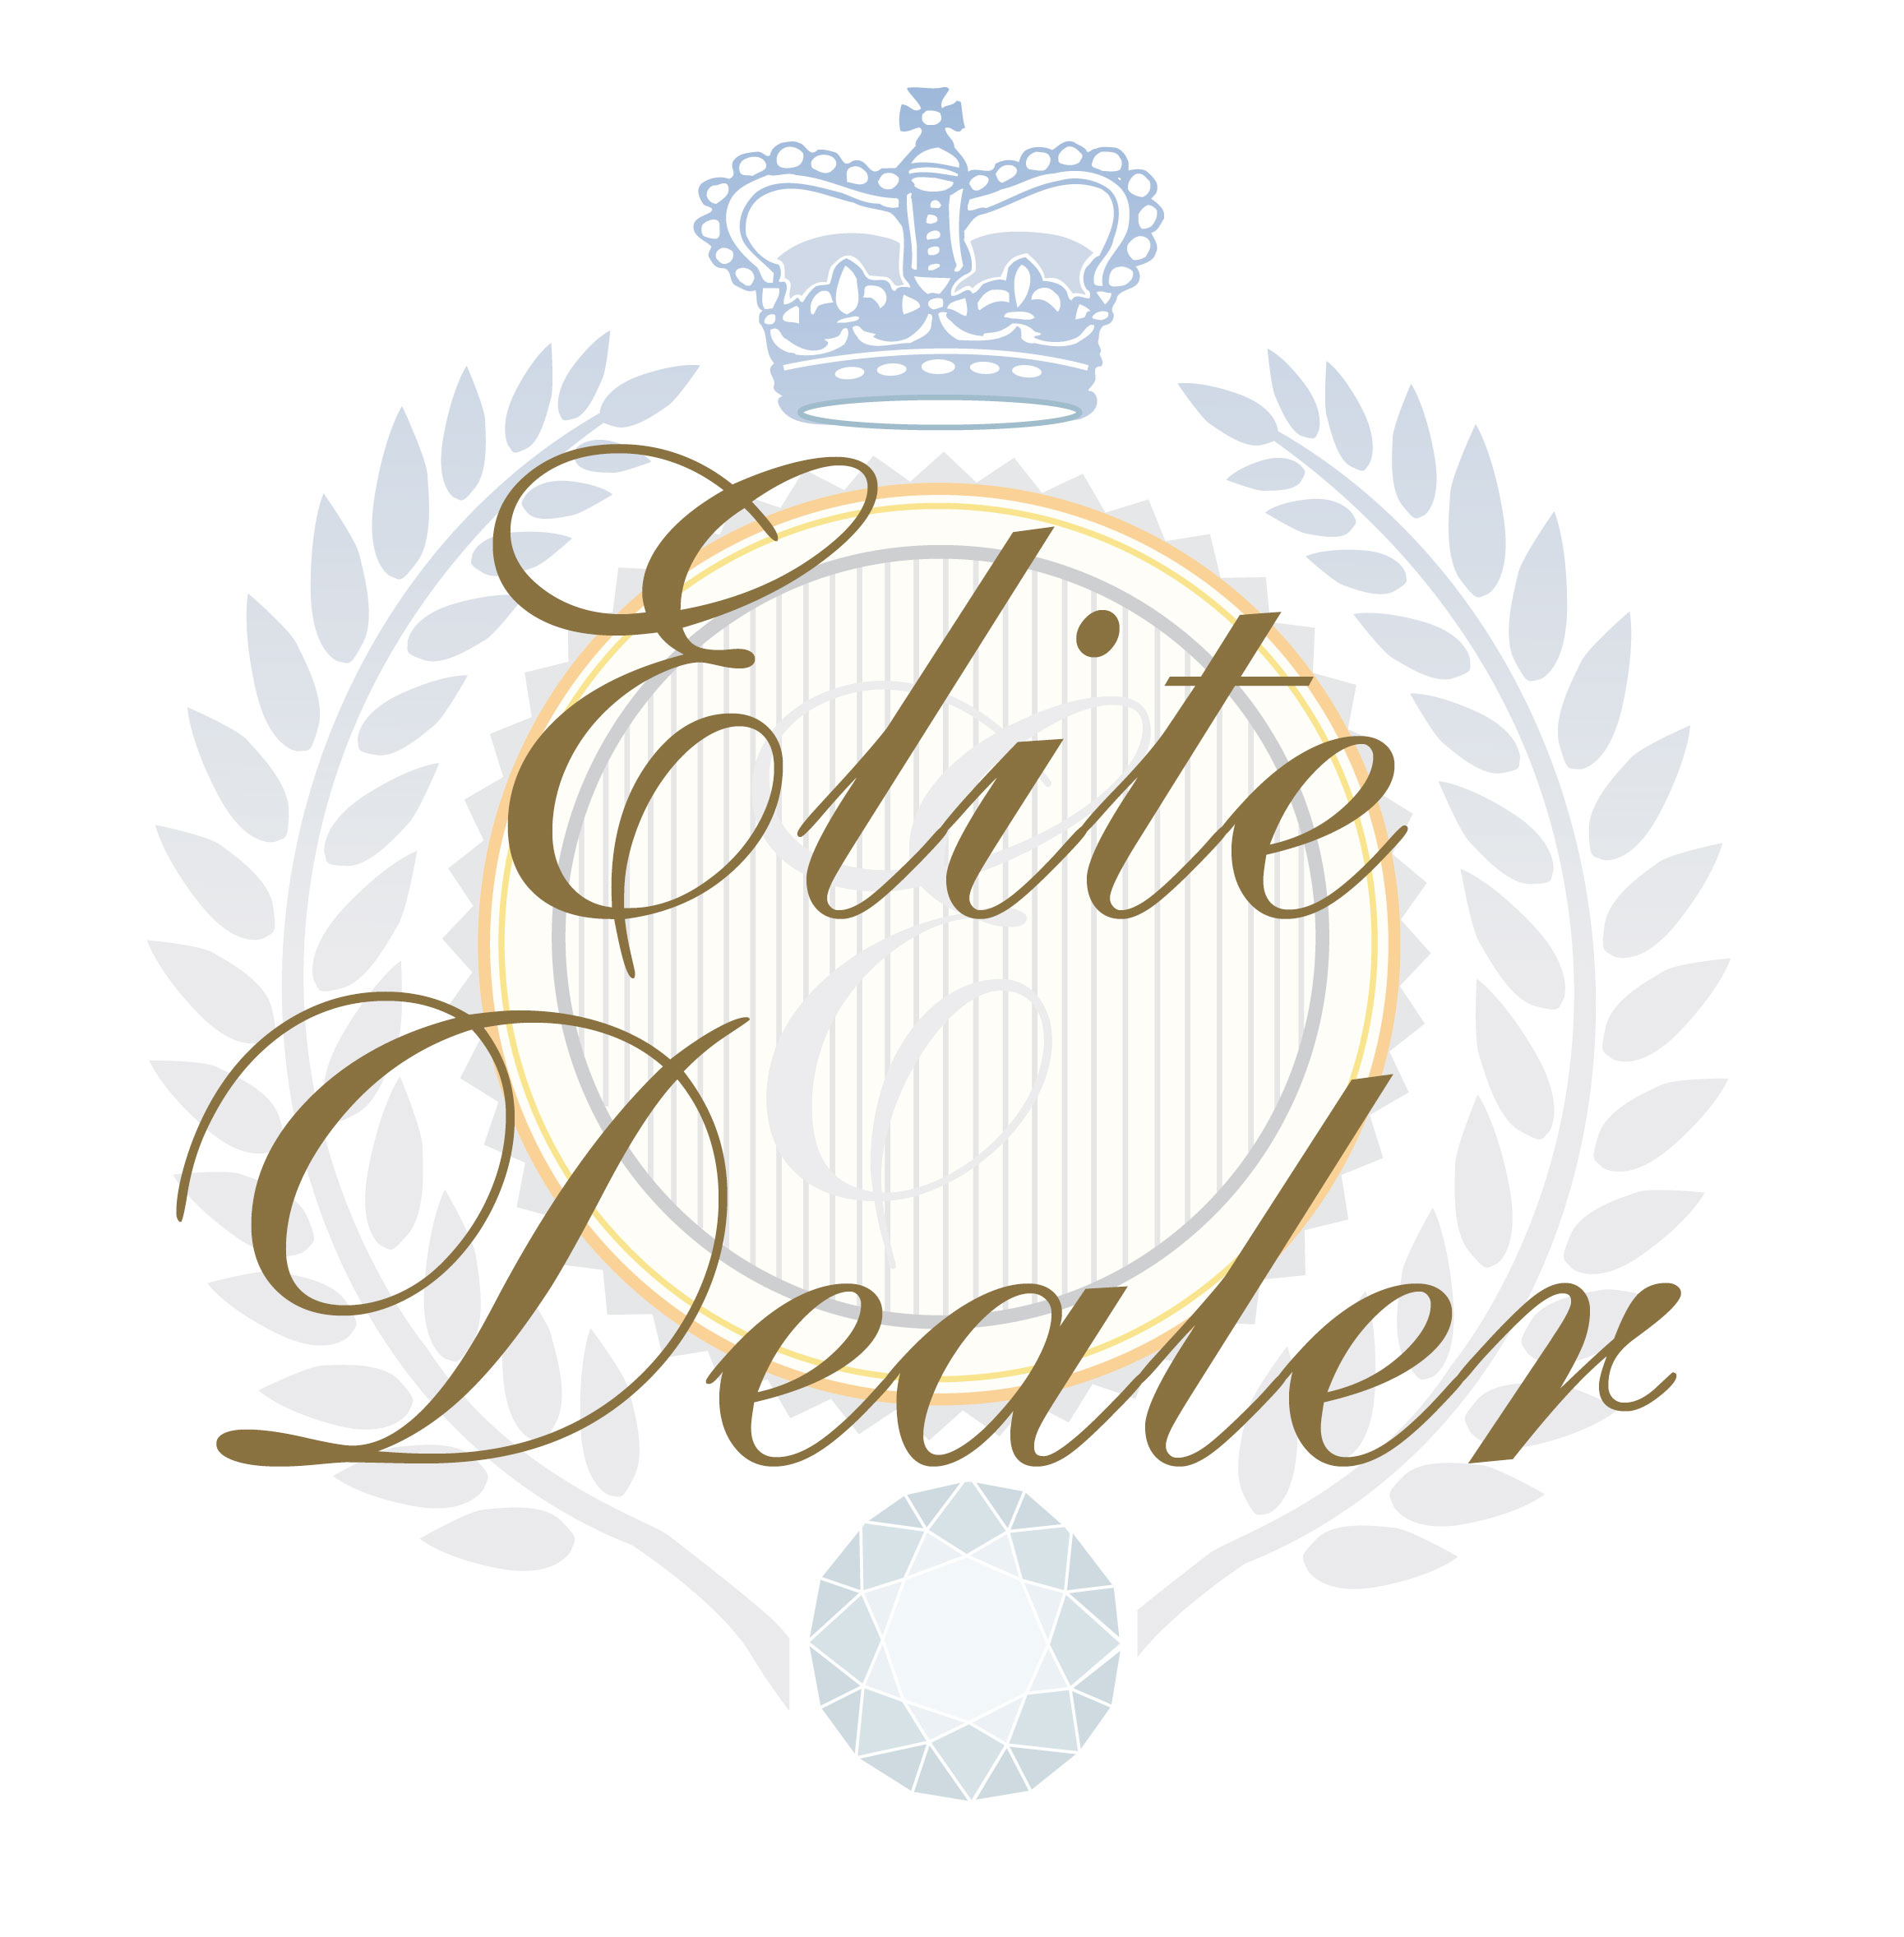 elite-dealer